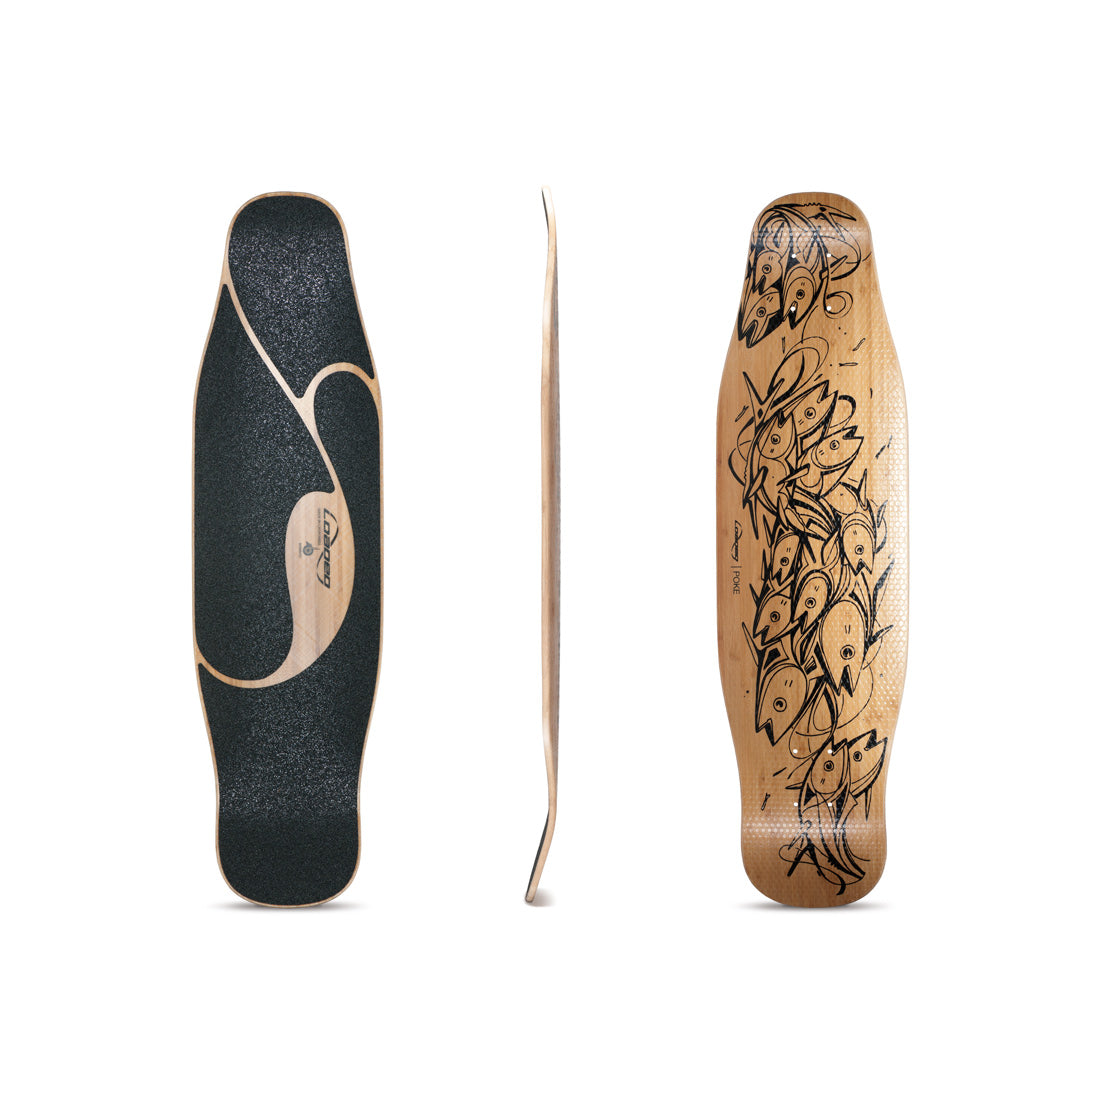 Poke | Carving and Pumping Longboard Skateboard | Loaded Boards